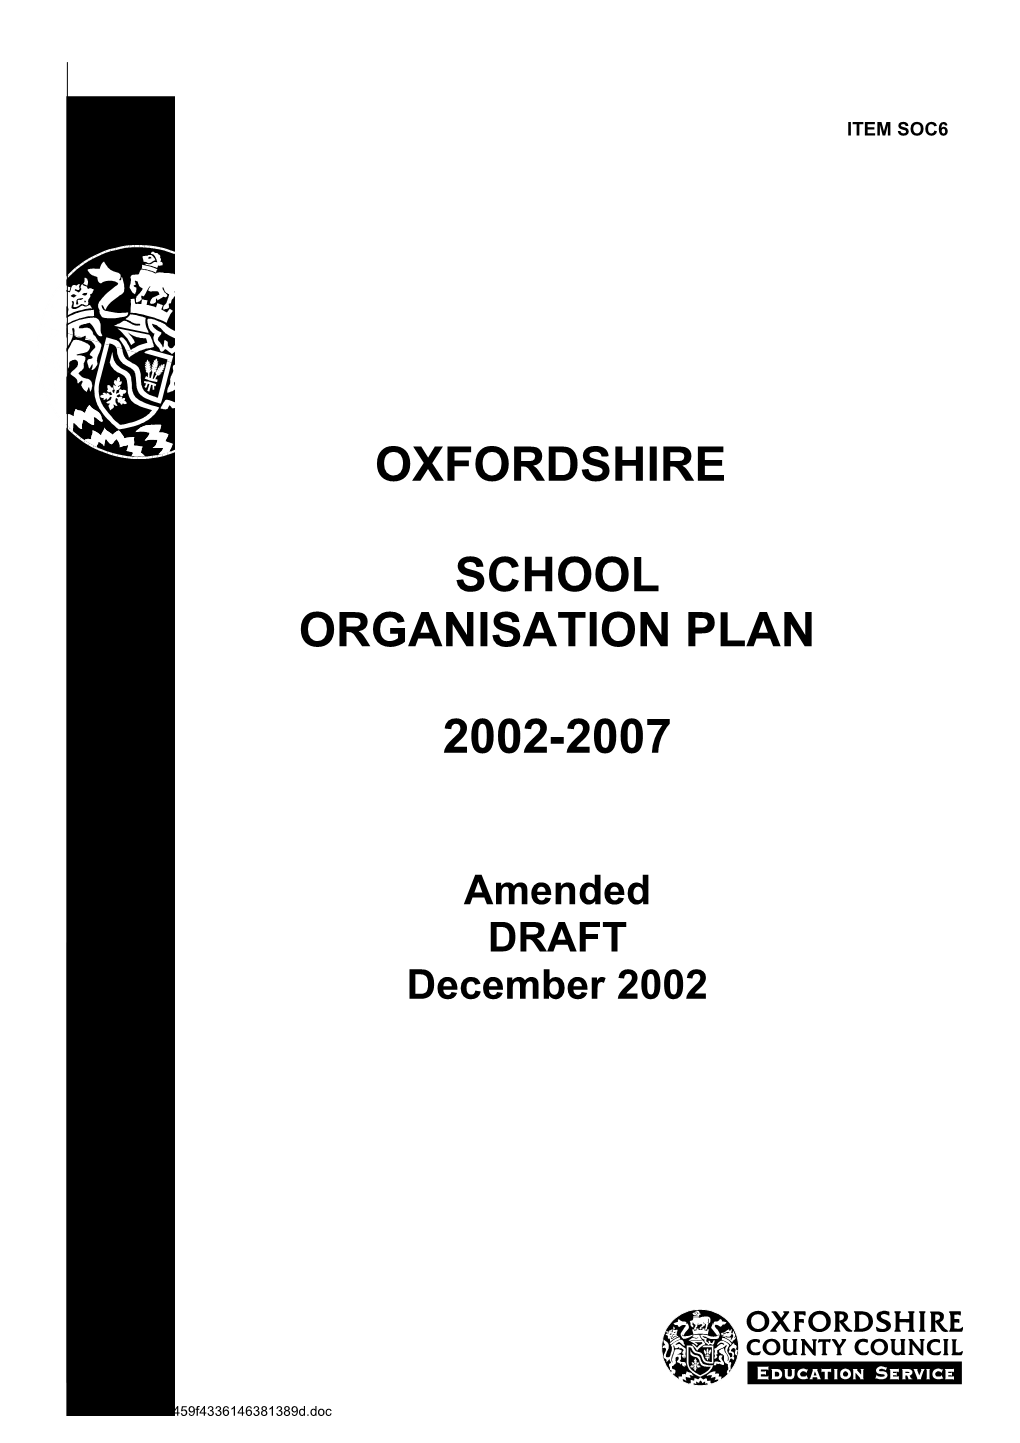 School Organisation Plan